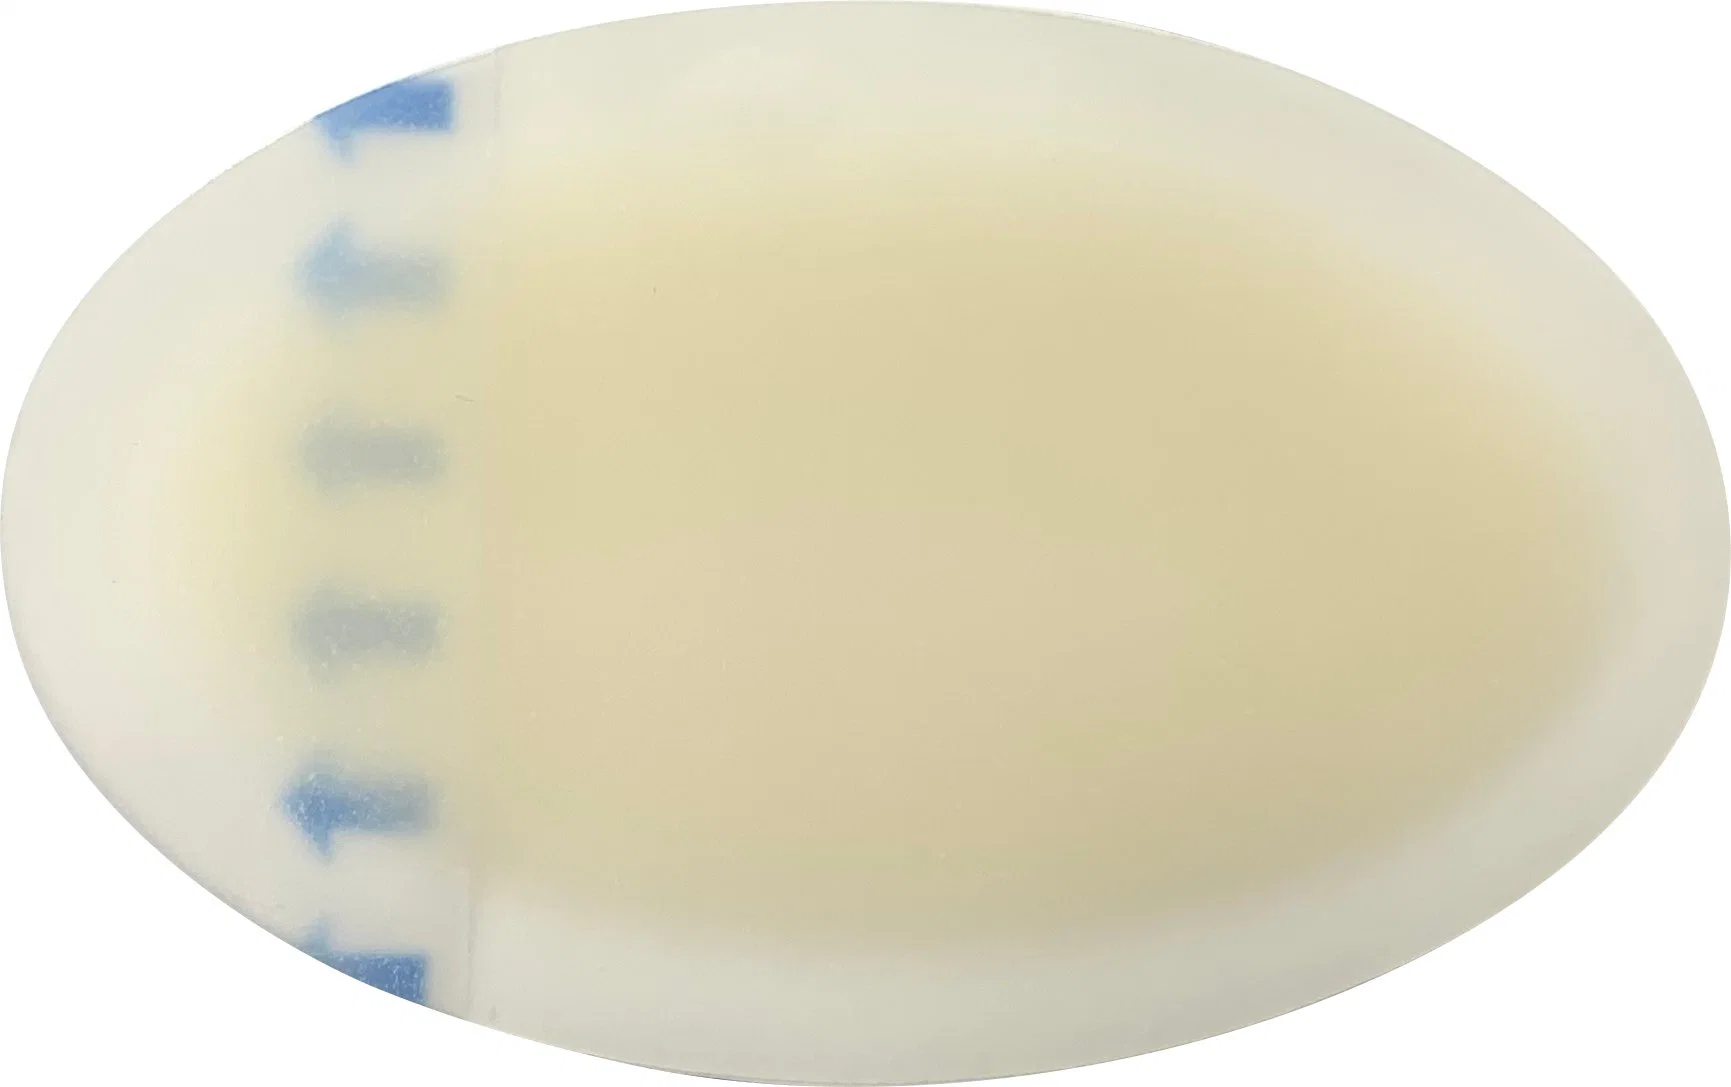 Мини-повязка для ран Гидроколлоидная гипсоклеенка/гидроколлоидный клейкий бандаж Ailebao Medical